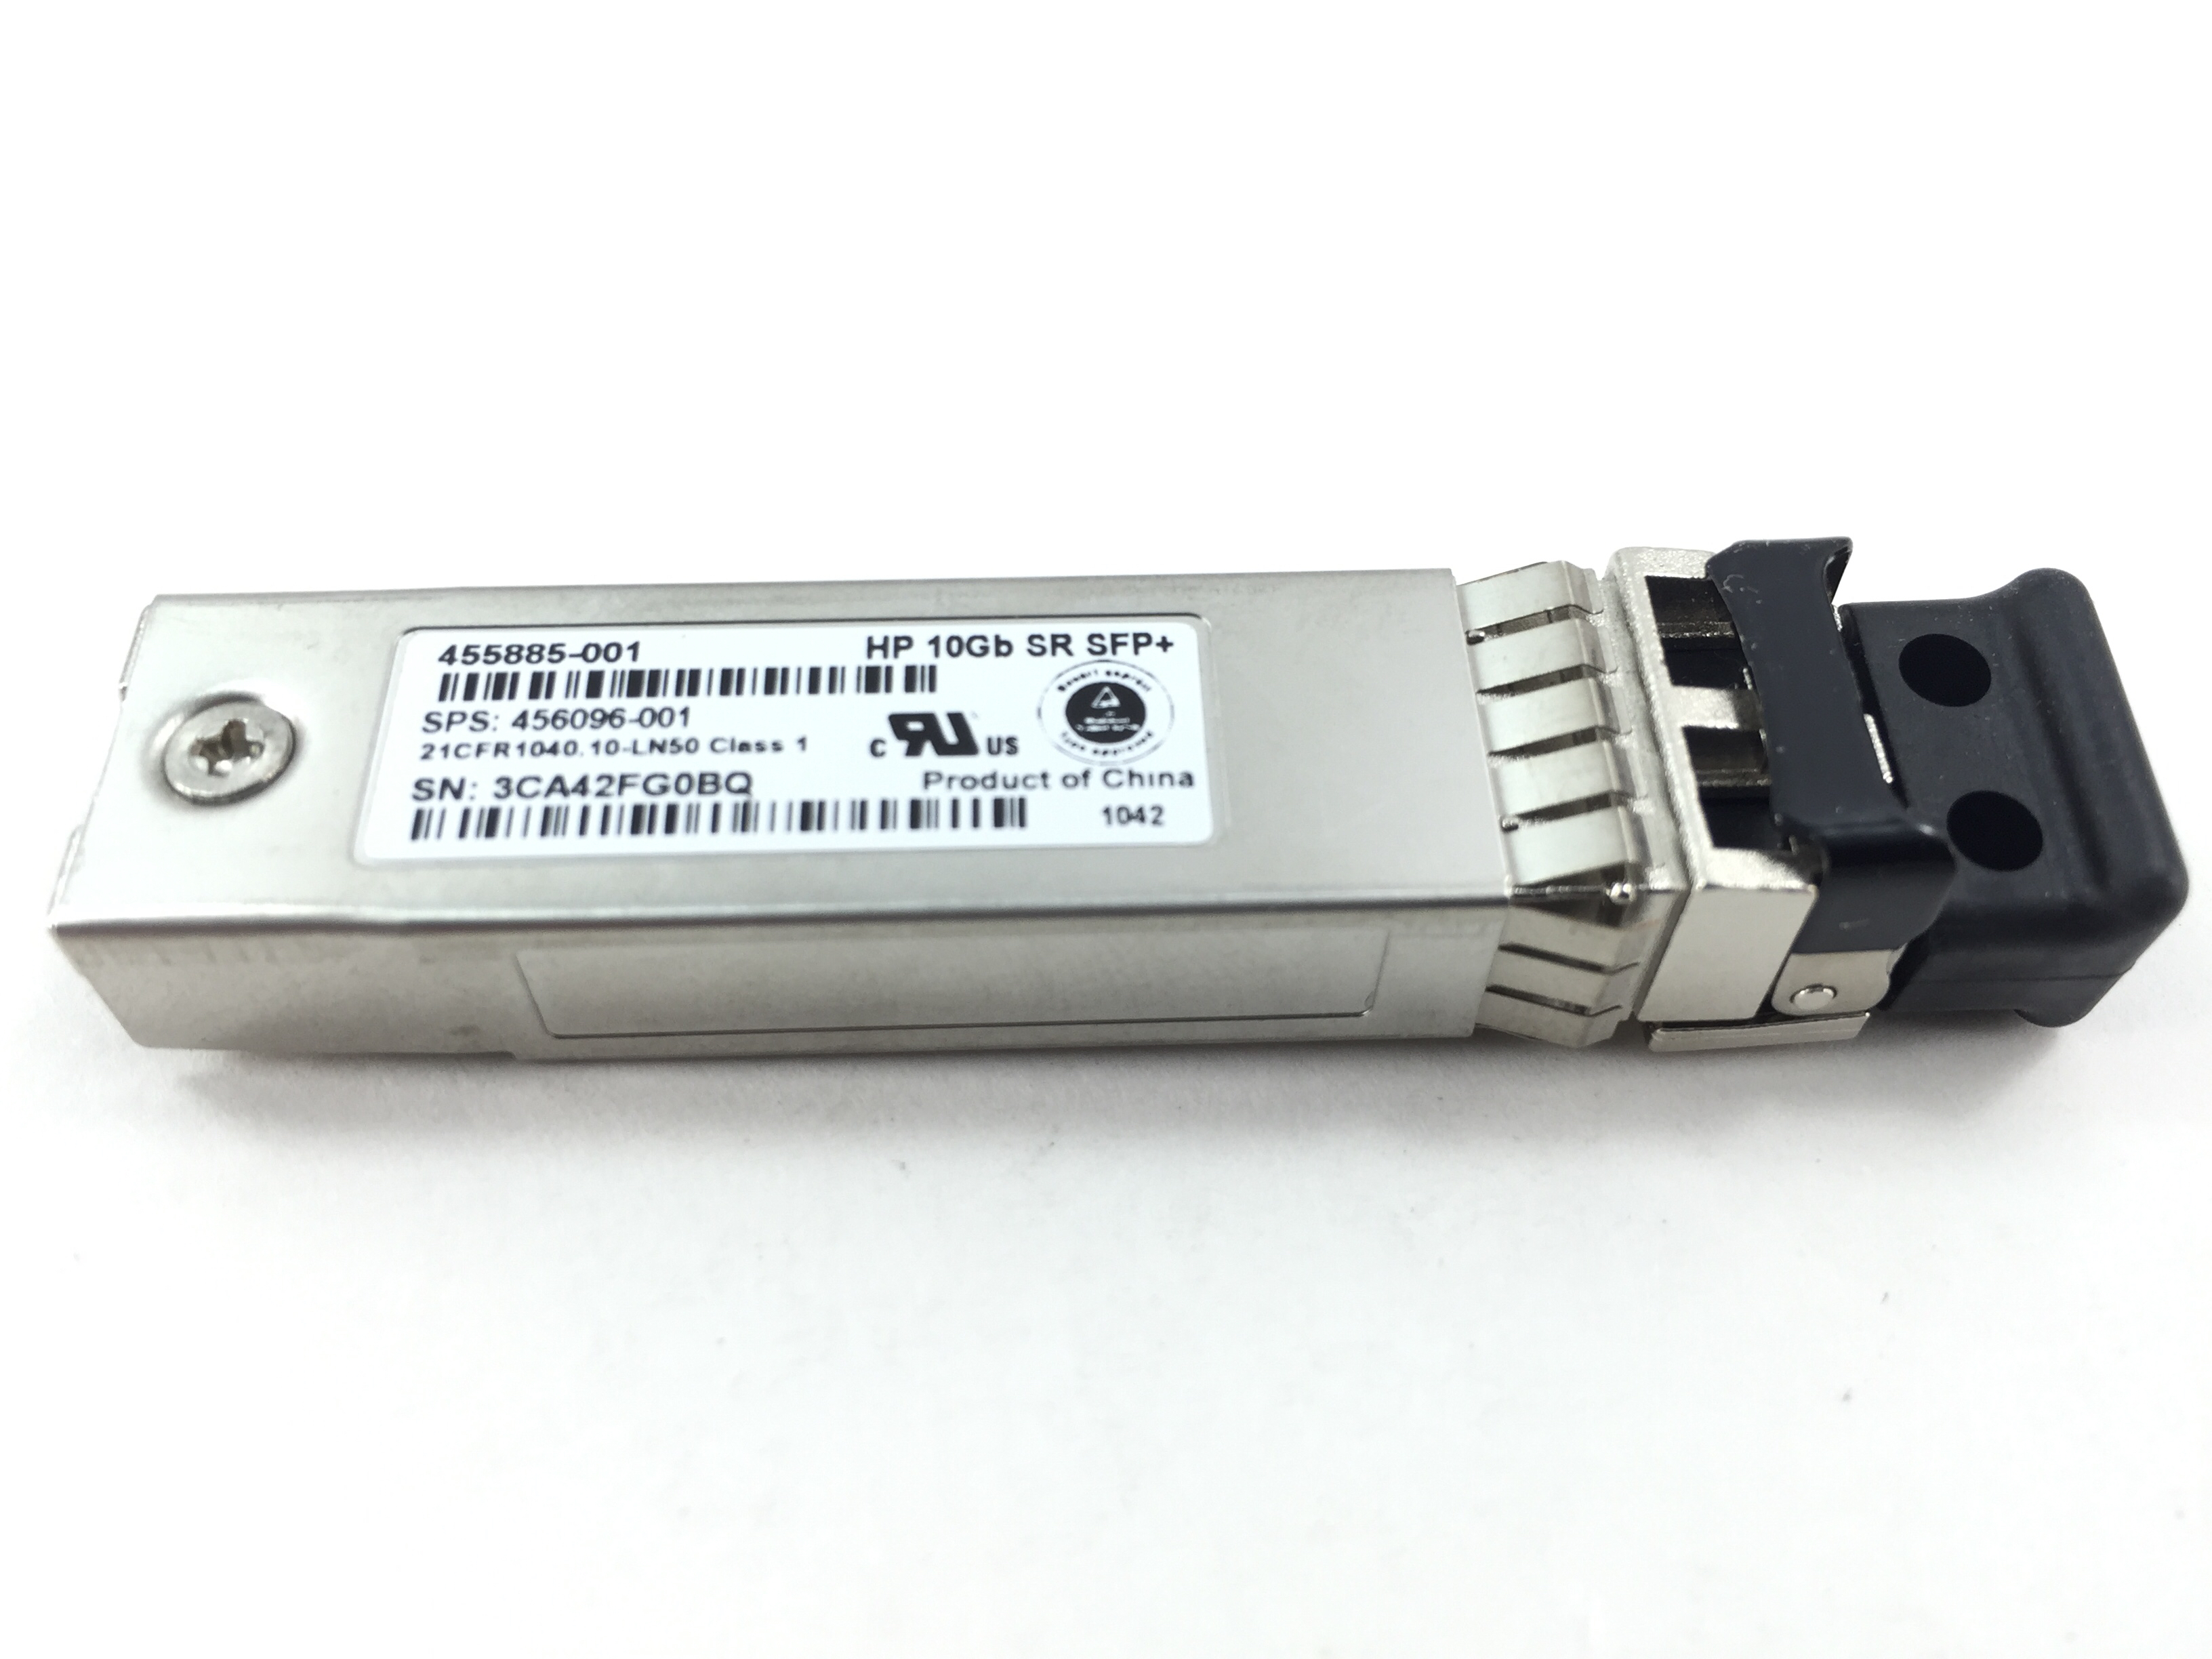 HP Blc 10GB Sr SFP+ Optical Transceiver Module (455885-001)